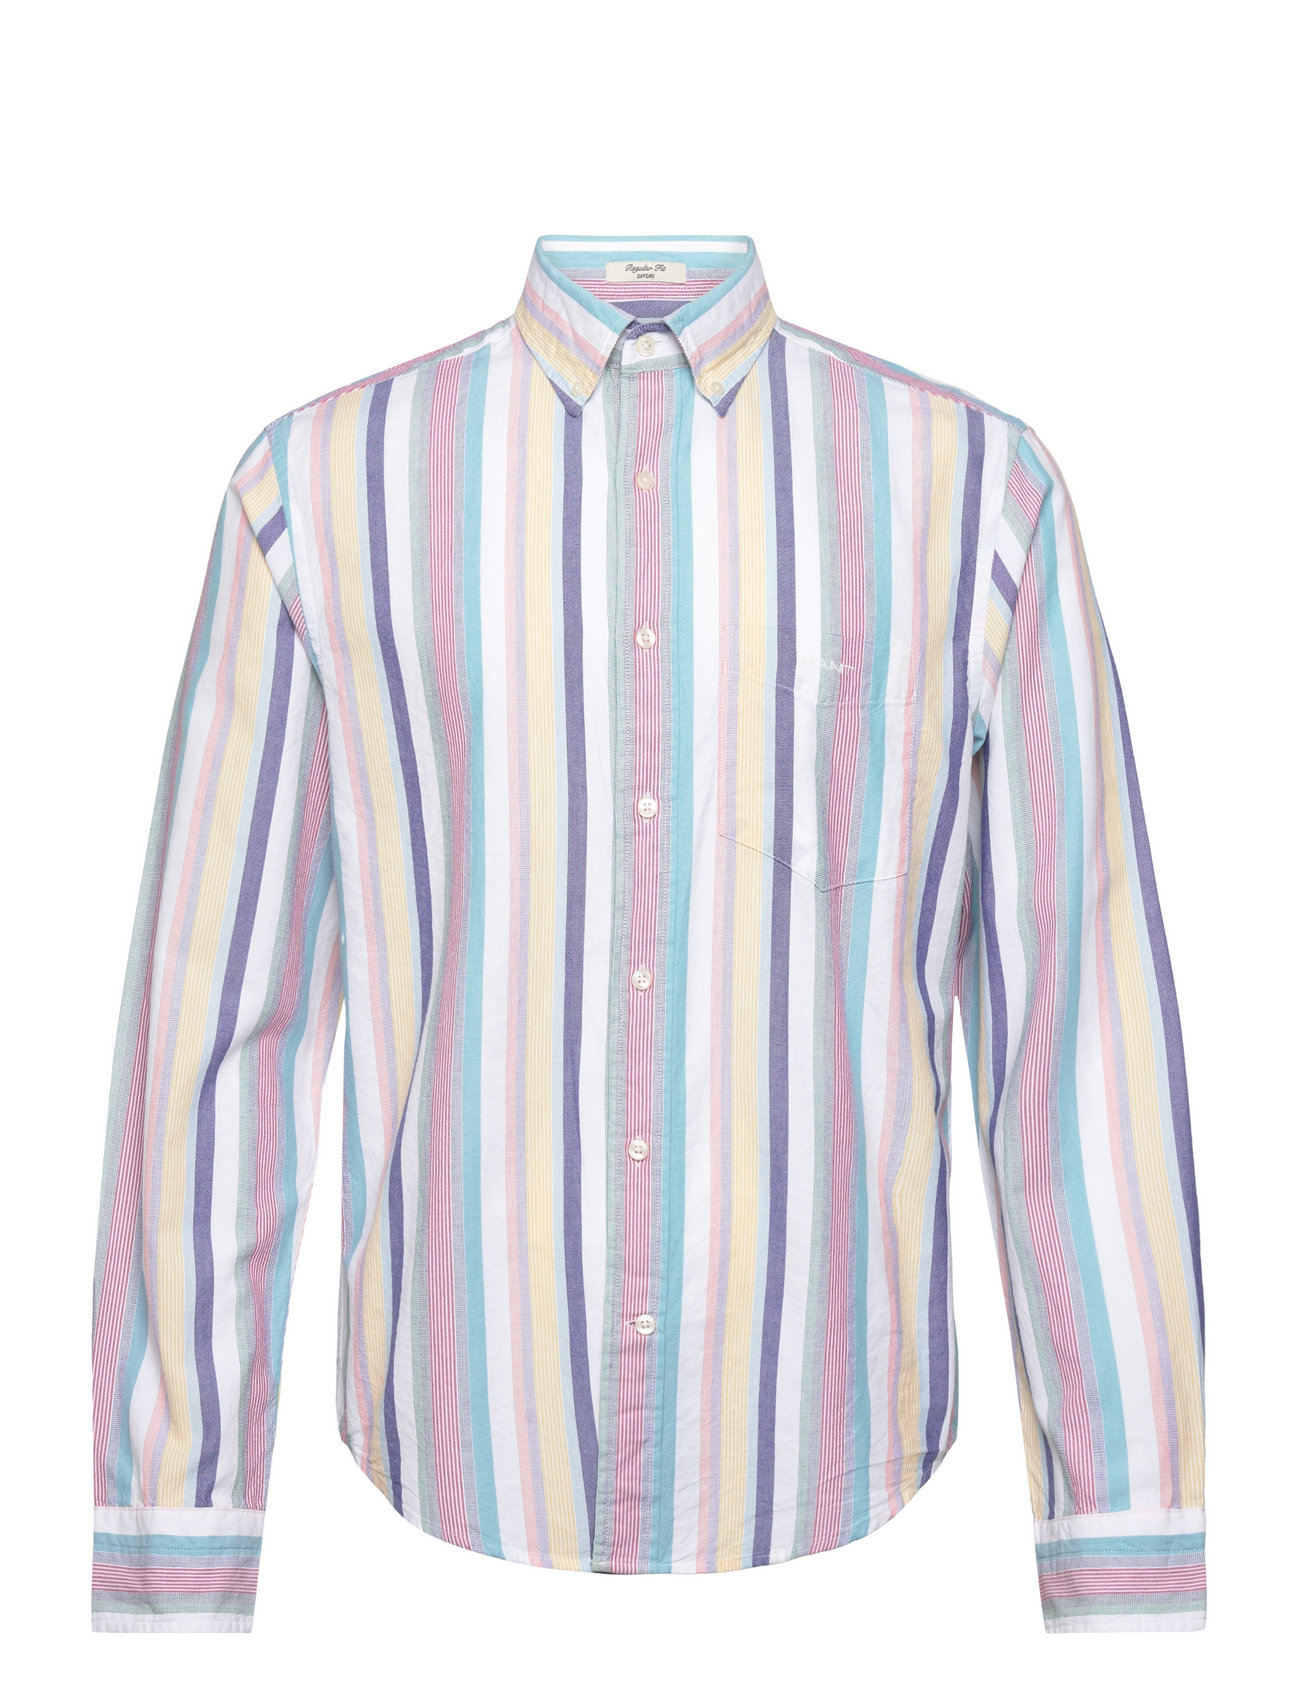 Slecht garage stropdas GANT Reg Ut Oxford Multi Stripe Shirt - Casual overhemden - Boozt.com